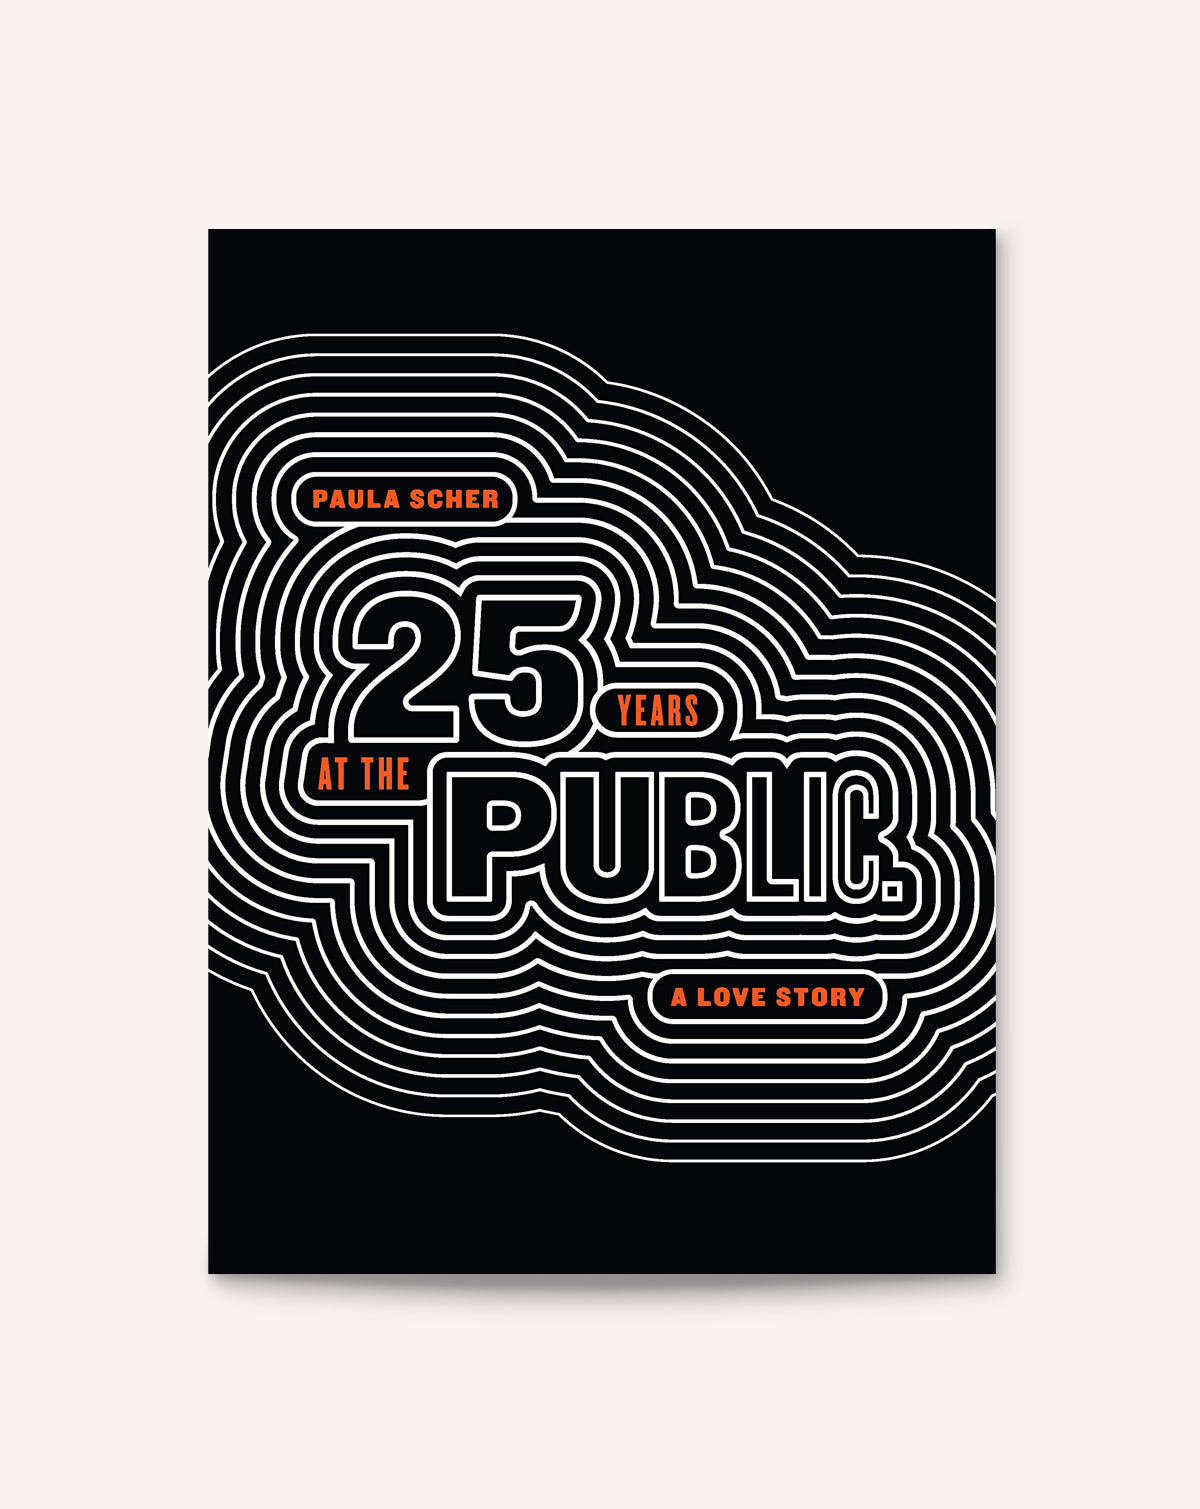 International Poster Book 2022 – Draw Down